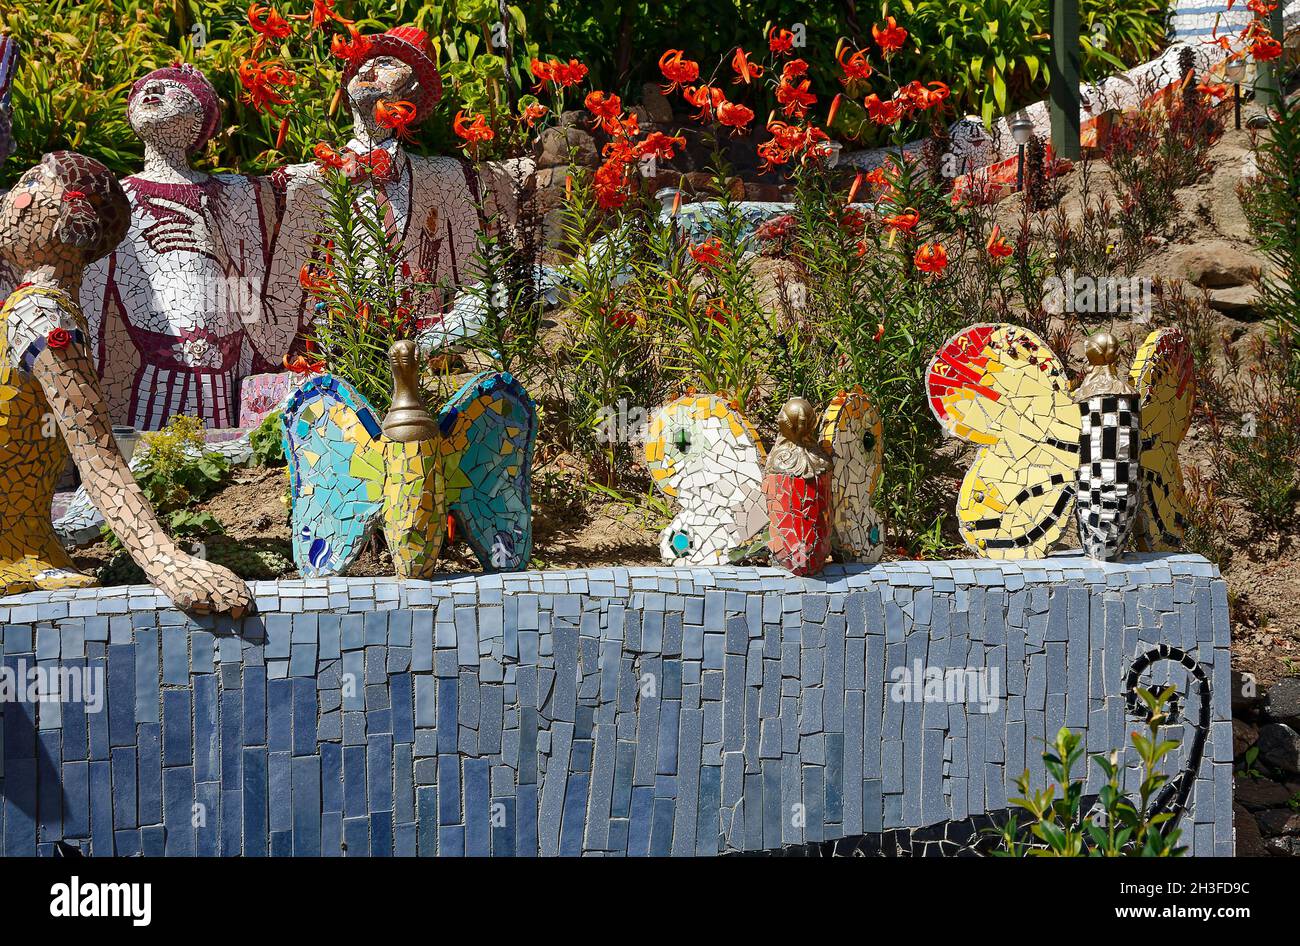 Gartenskulpturen, Mosaikfliesen, Schmetterlinge, Menschen, Blumen, Einzigartig, kreativ, Kunst, The Giants House, South Island, Akaroa; Neuseeland Stockfoto